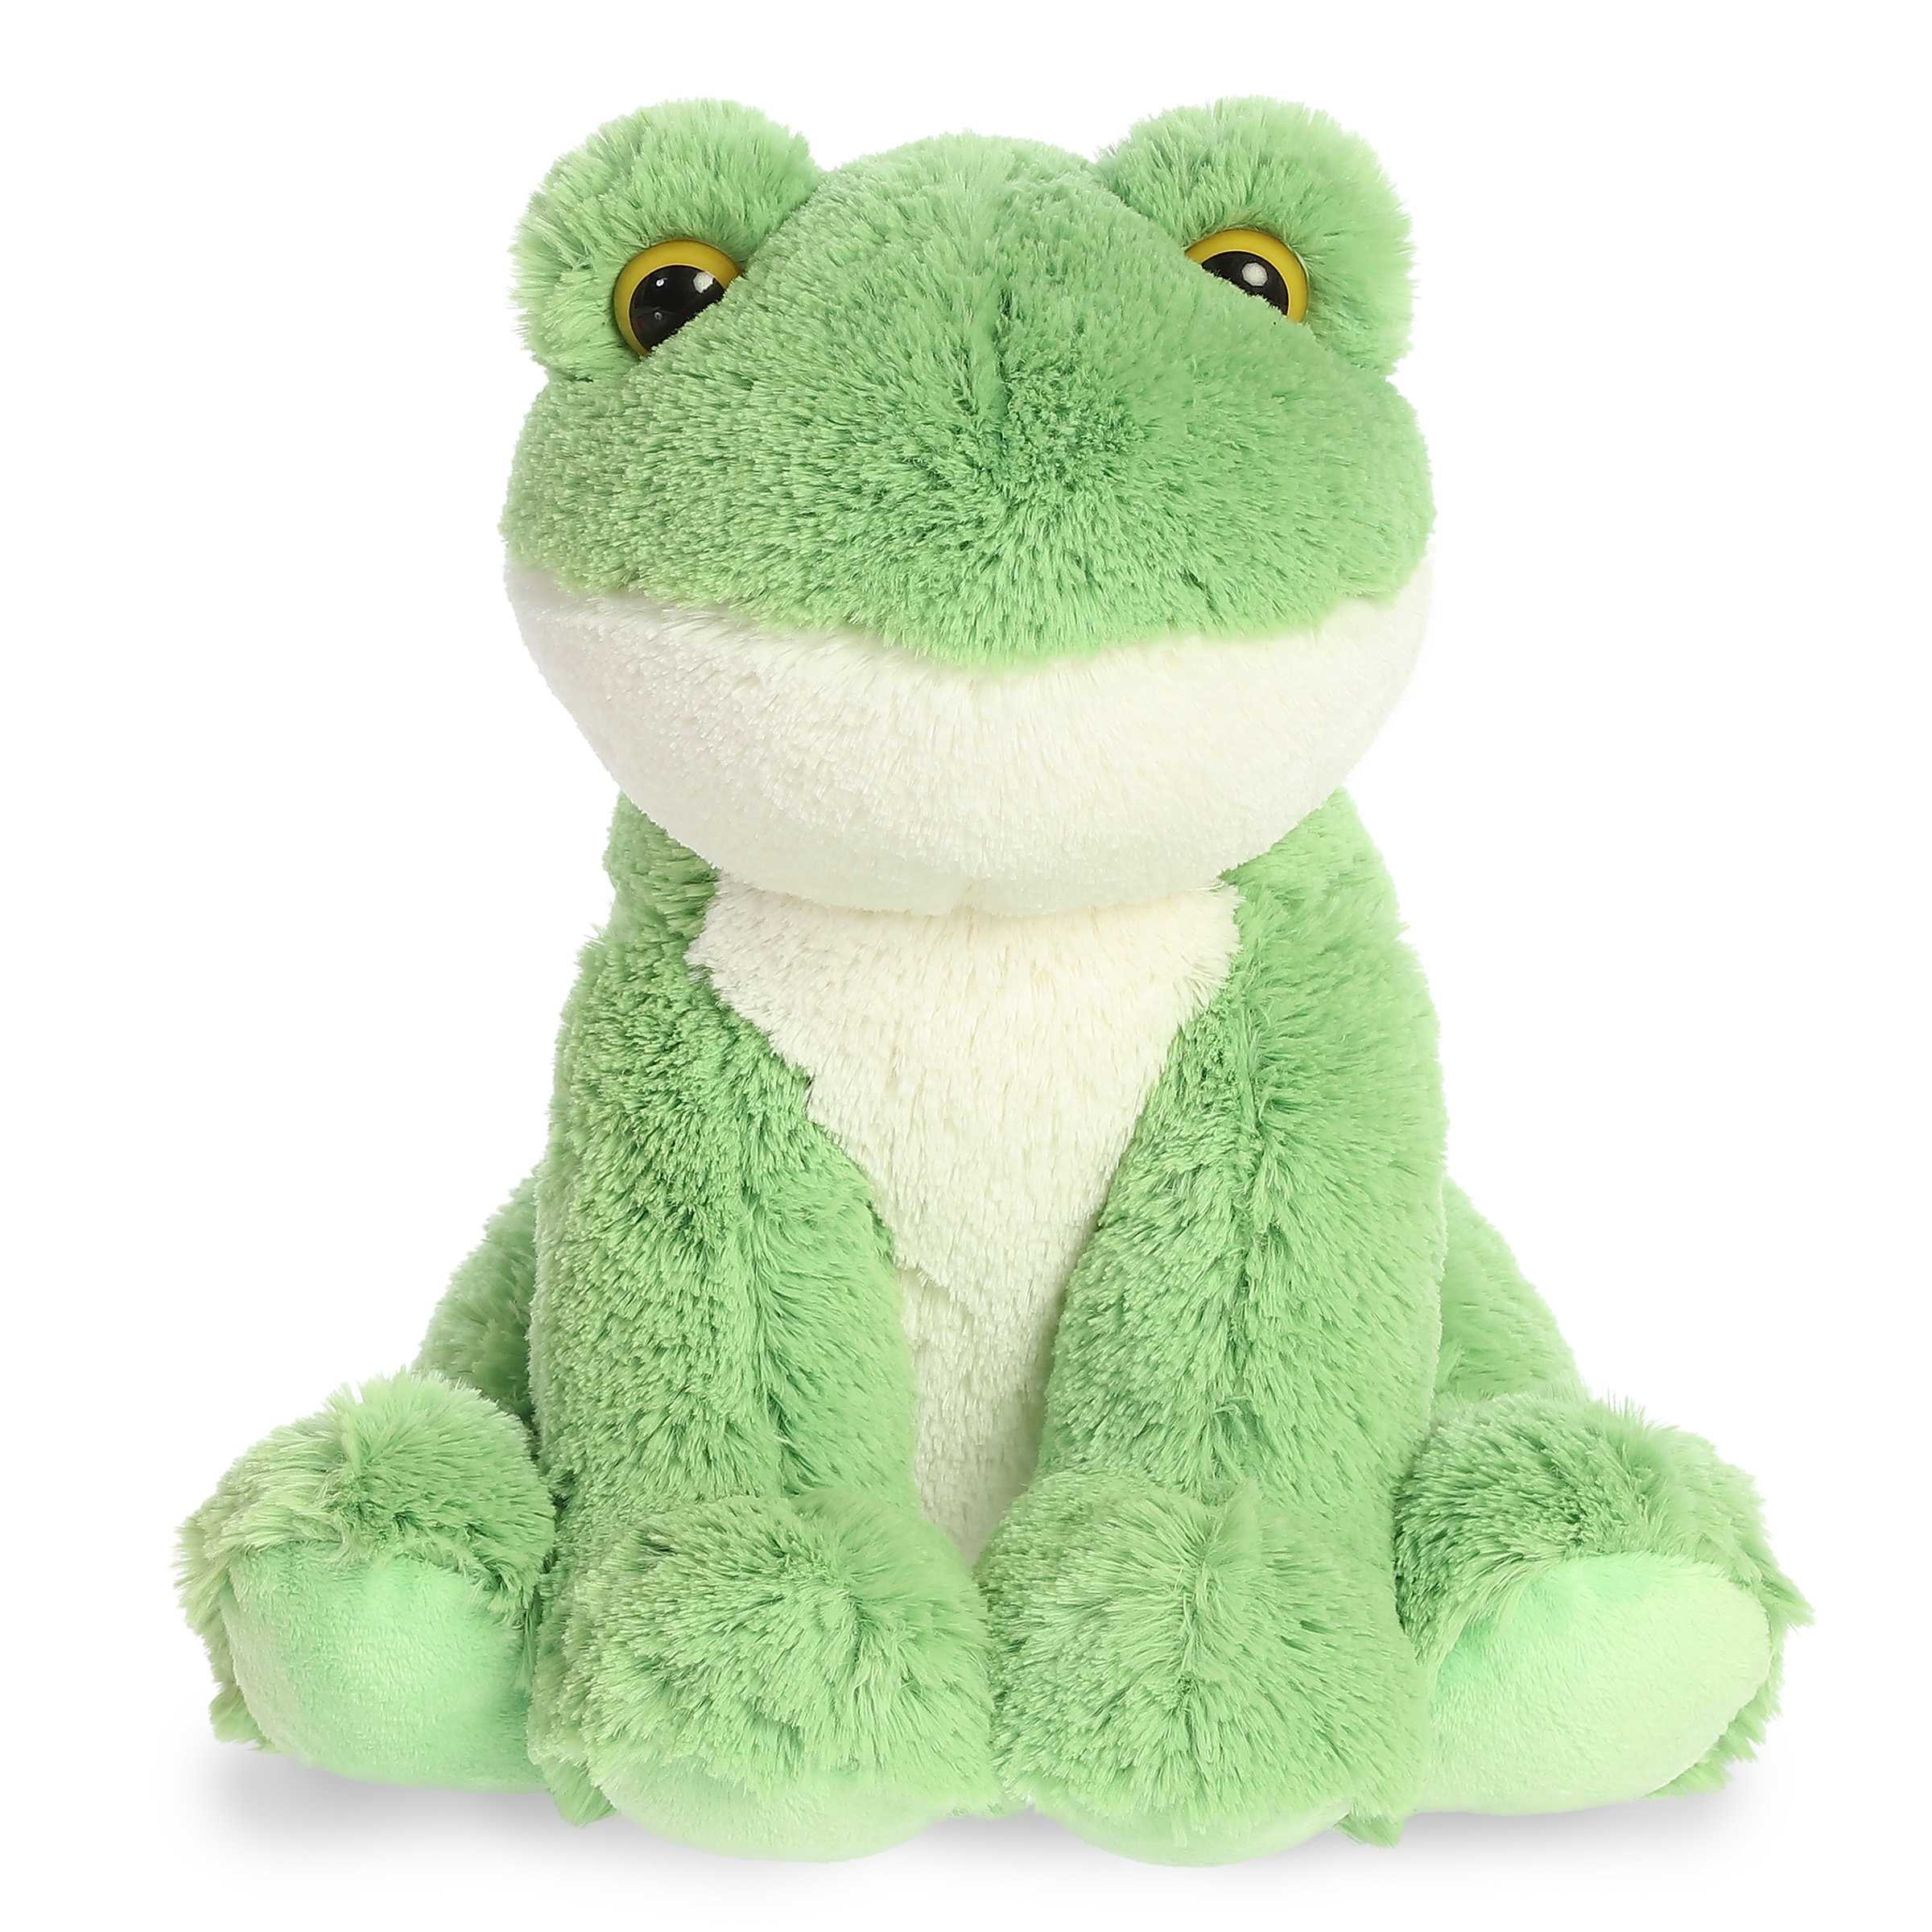 Frog Stuffed Animal, Aurora, Fluffy, Soft, Green and White, Sitting Frog